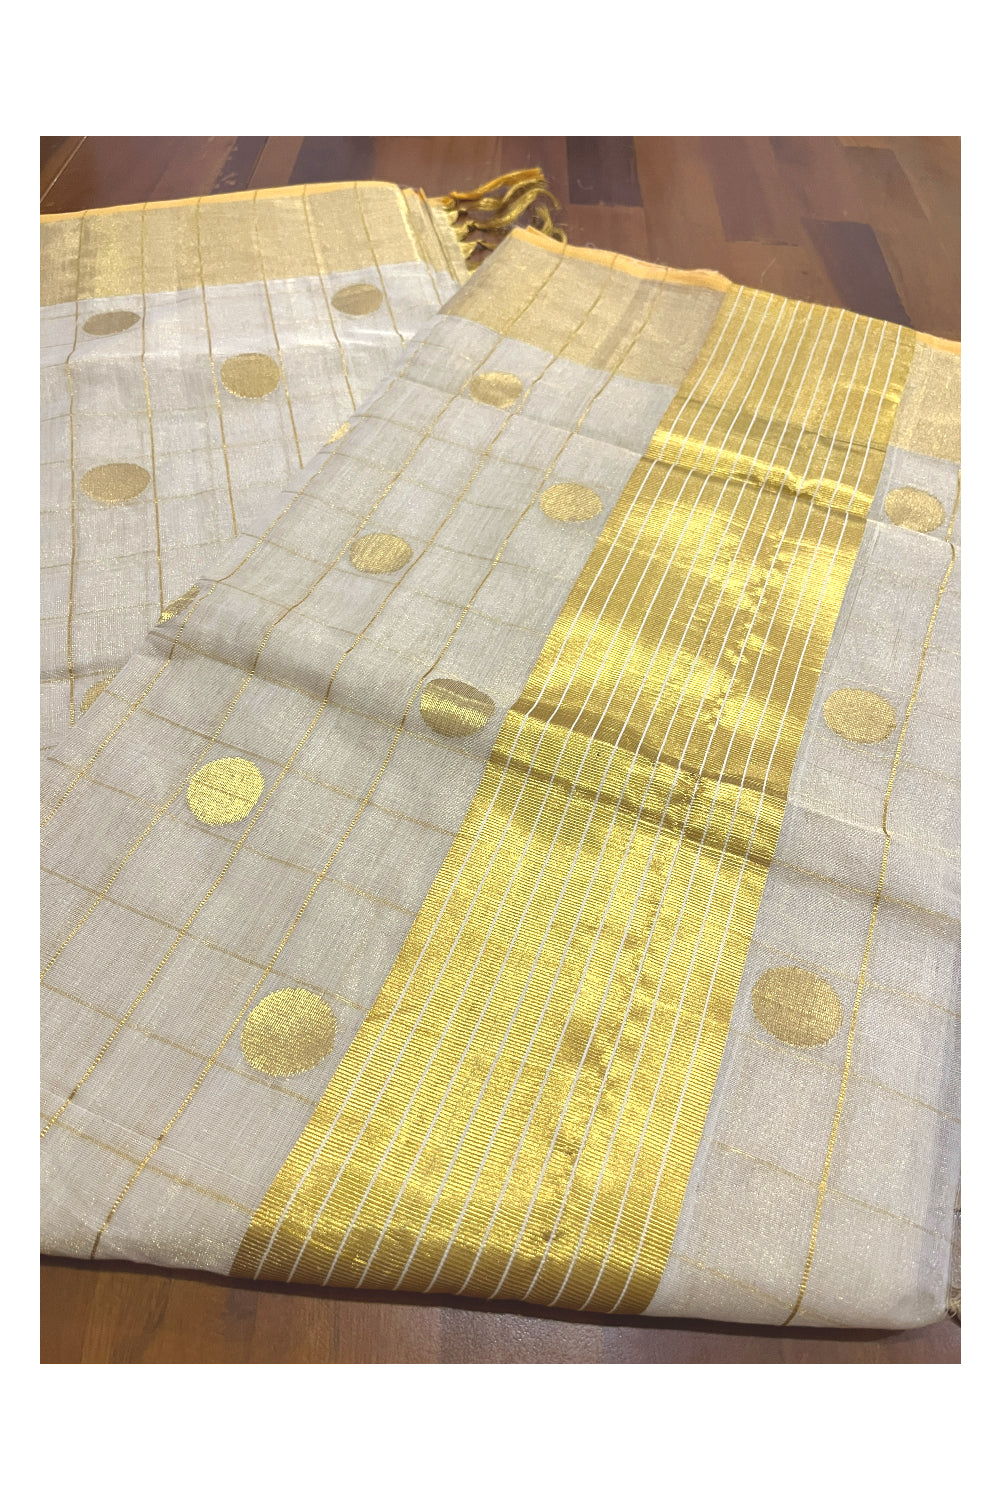 Southloom Premium Handloom Tissue Check Design Saree with Golden Polka Work Across Body